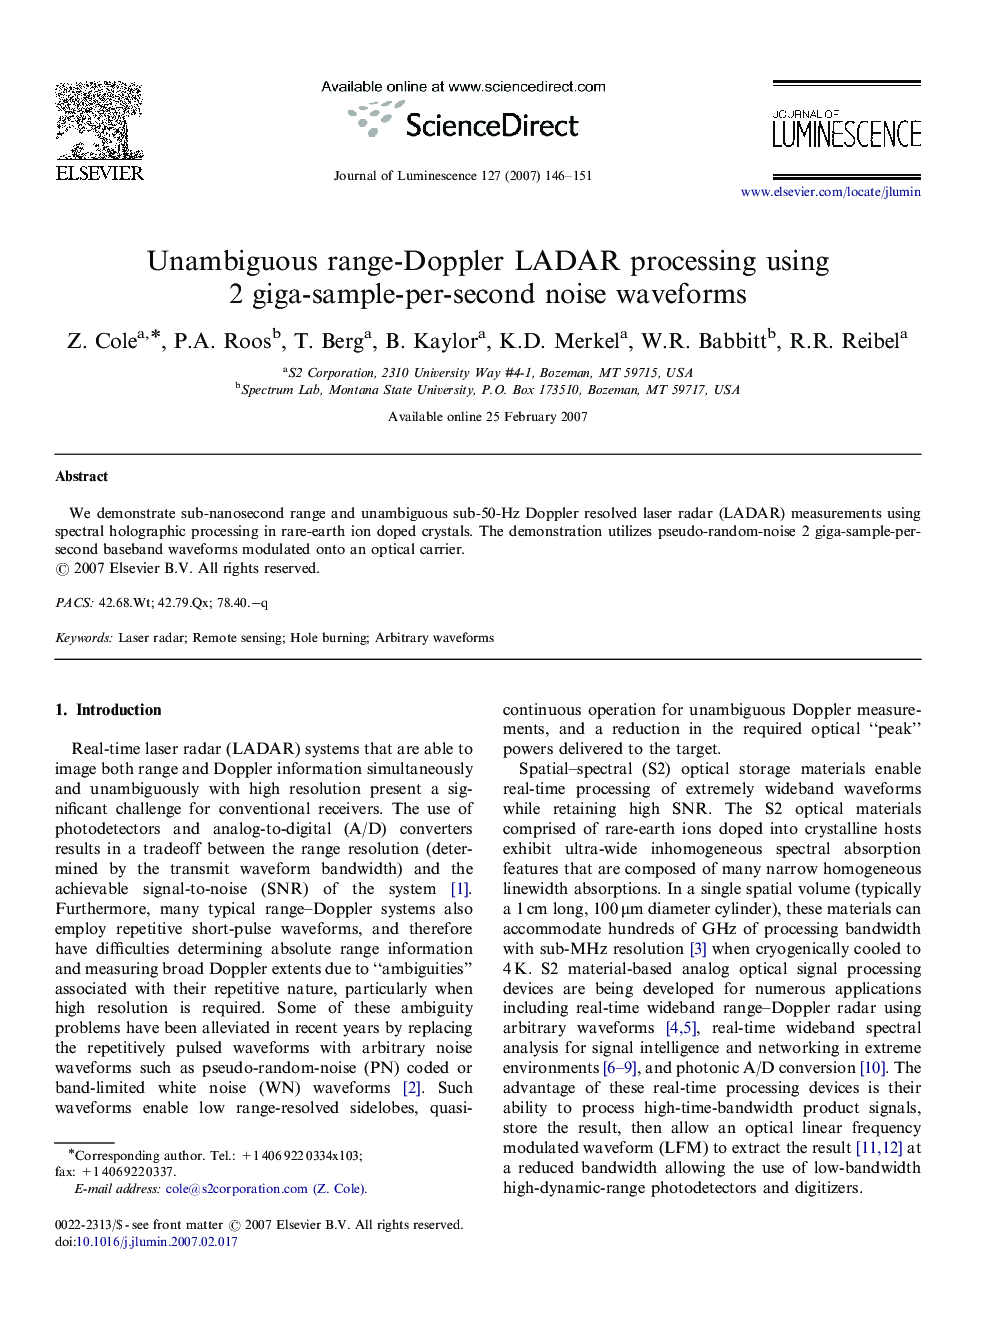 Unambiguous range-Doppler LADAR processing using 2 giga-sample-per-second noise waveforms